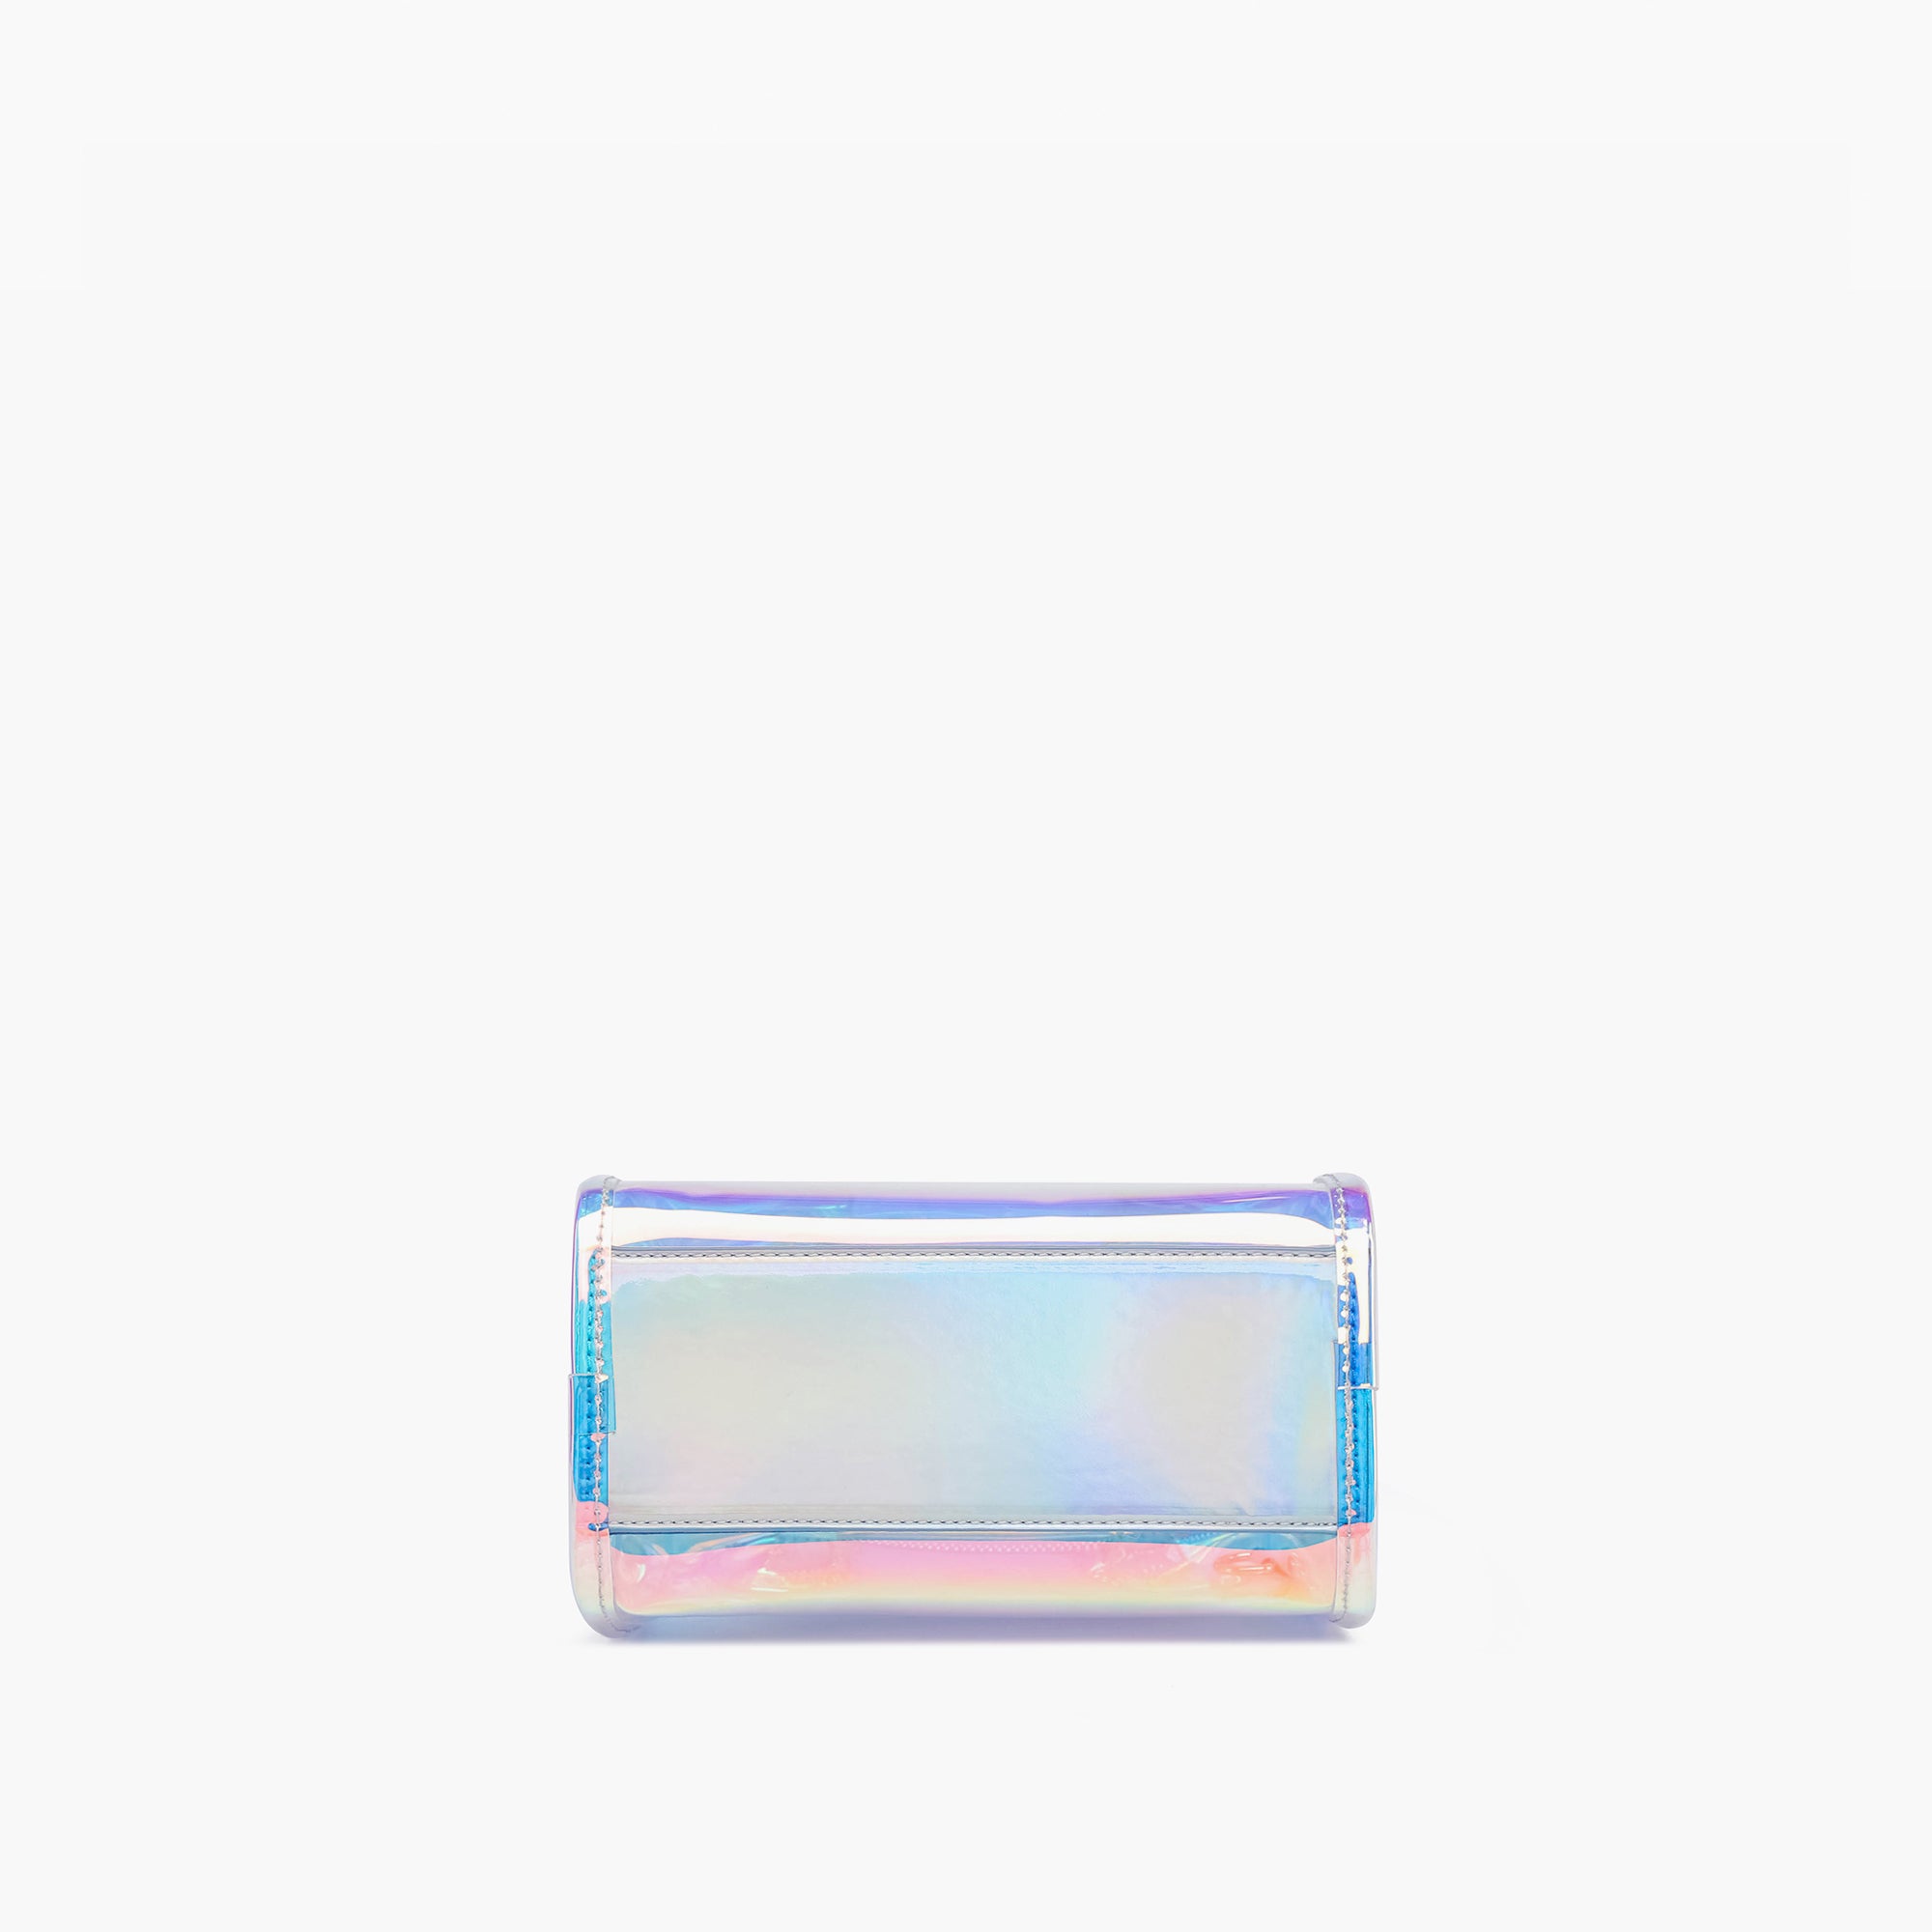 Crystal Mini Hologram Clear Crossbody